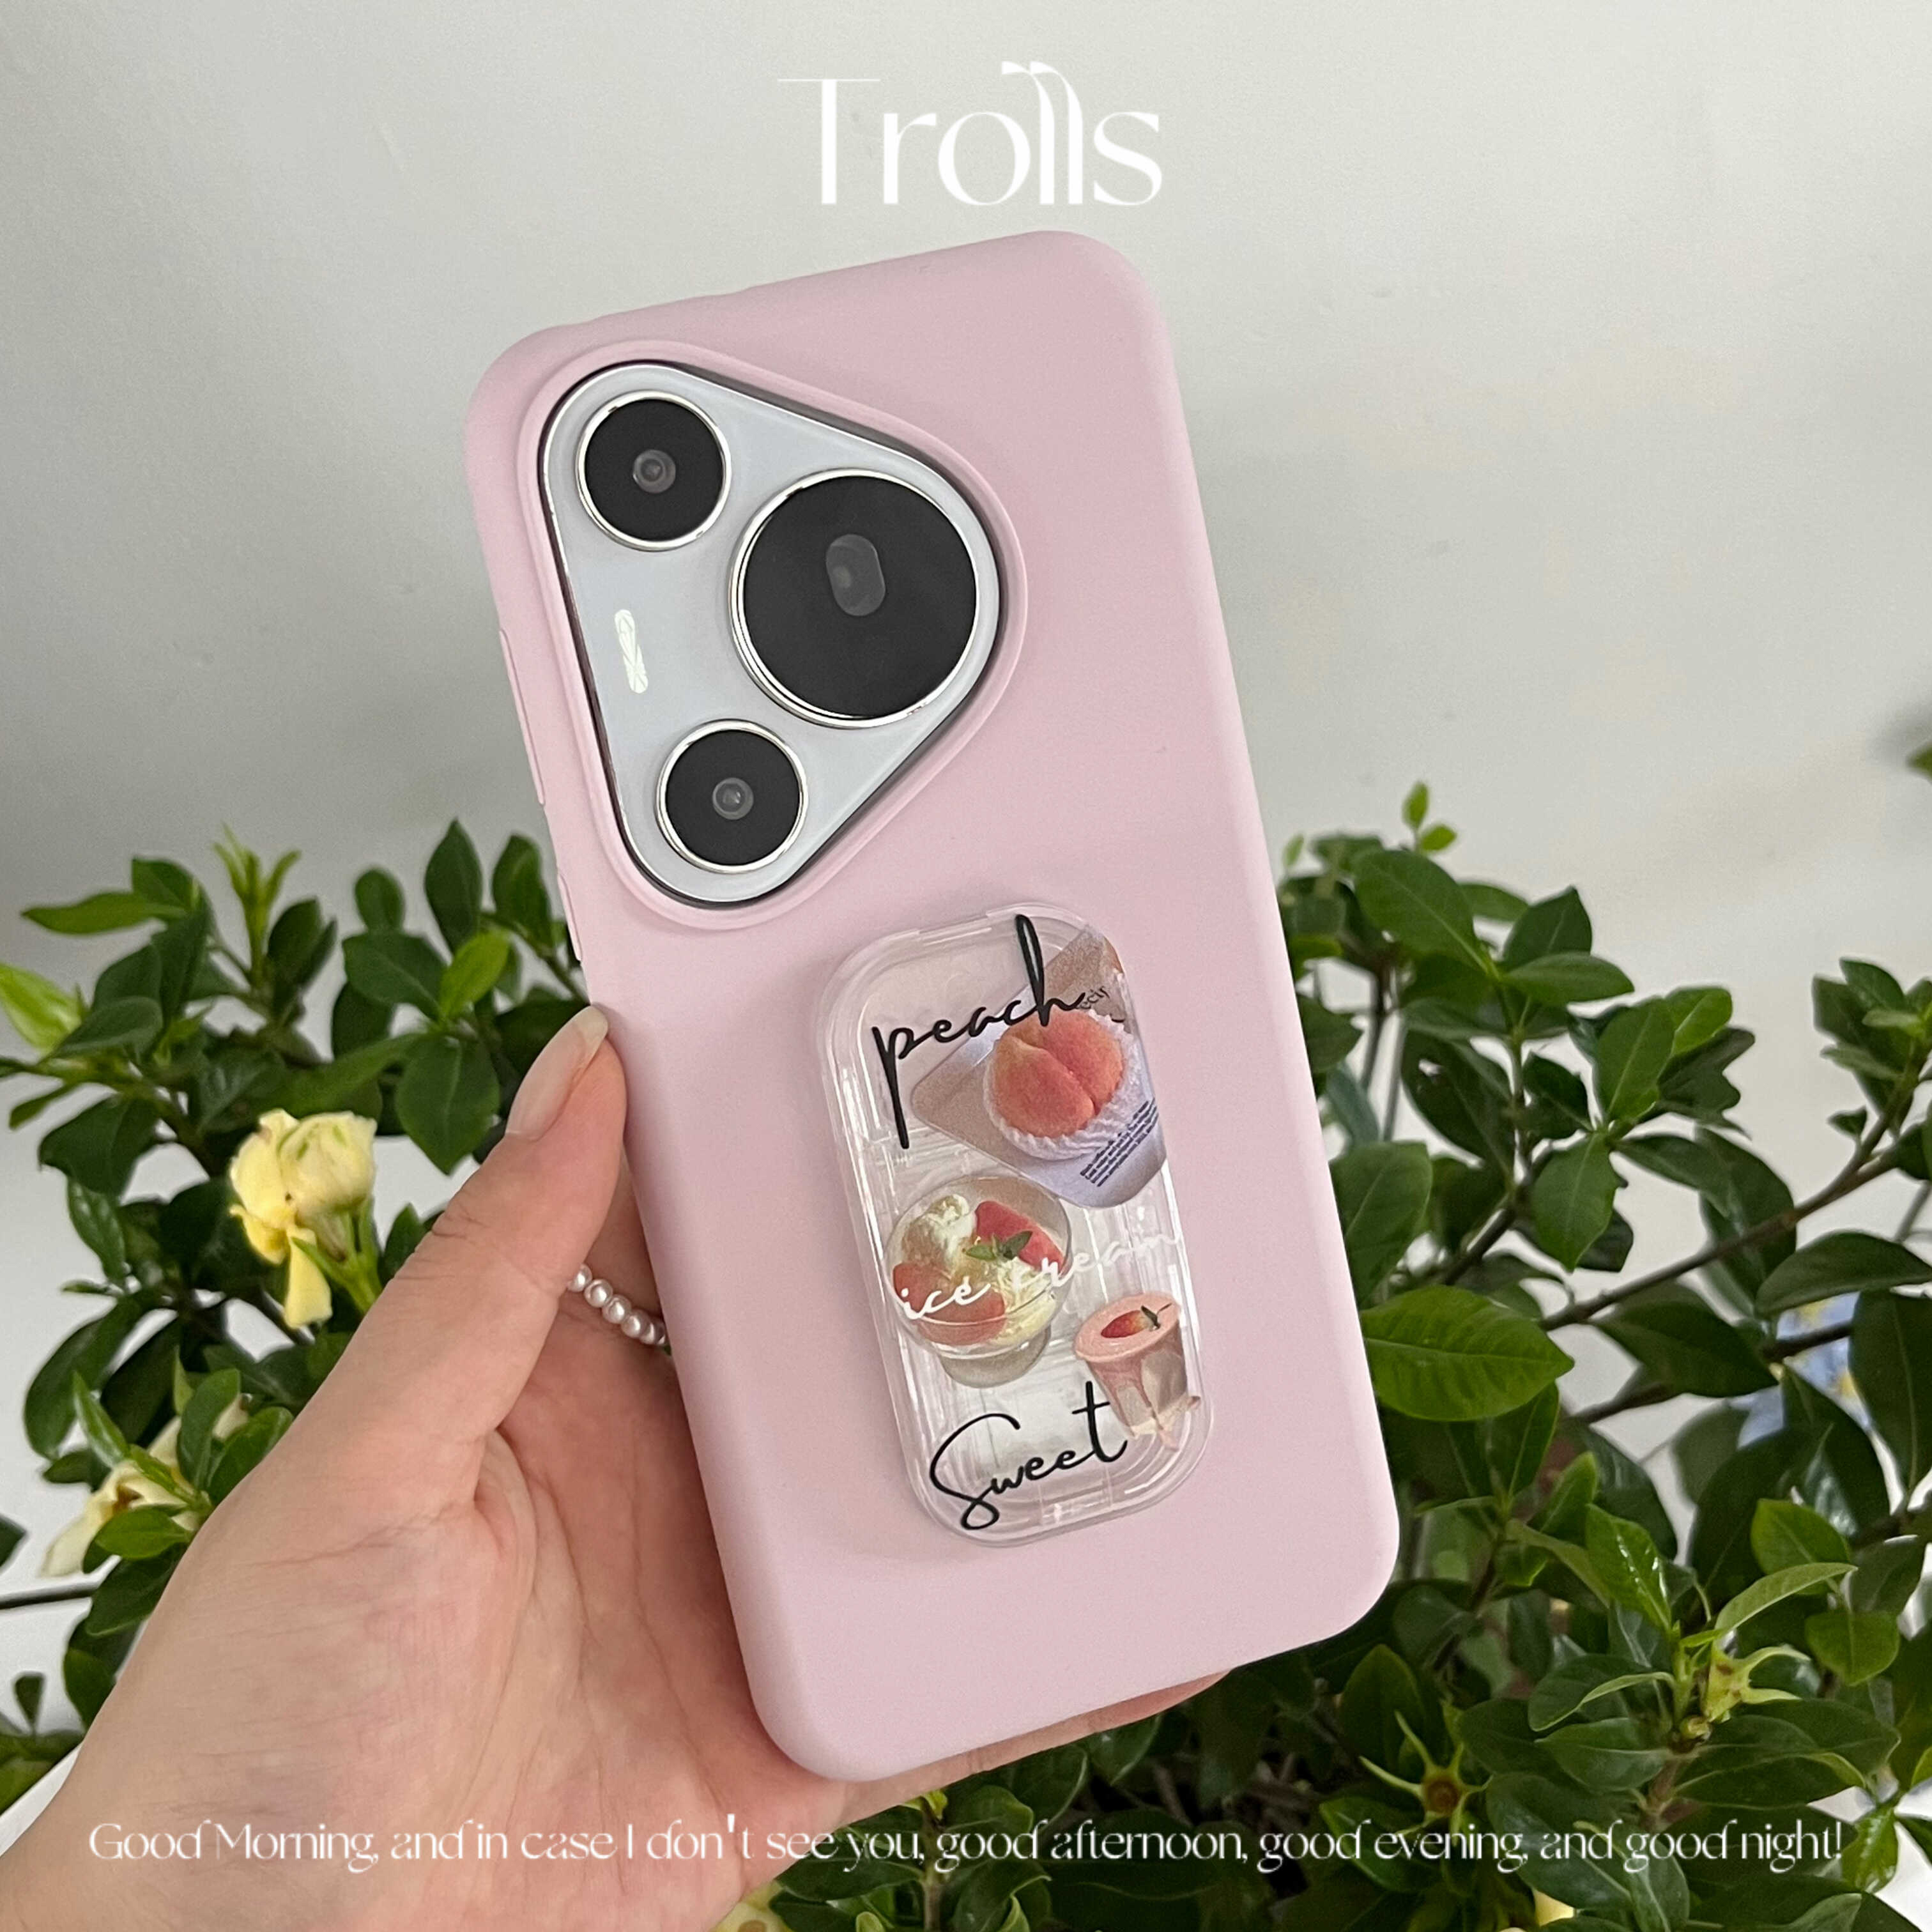 Trolls【人间水蜜桃】chao